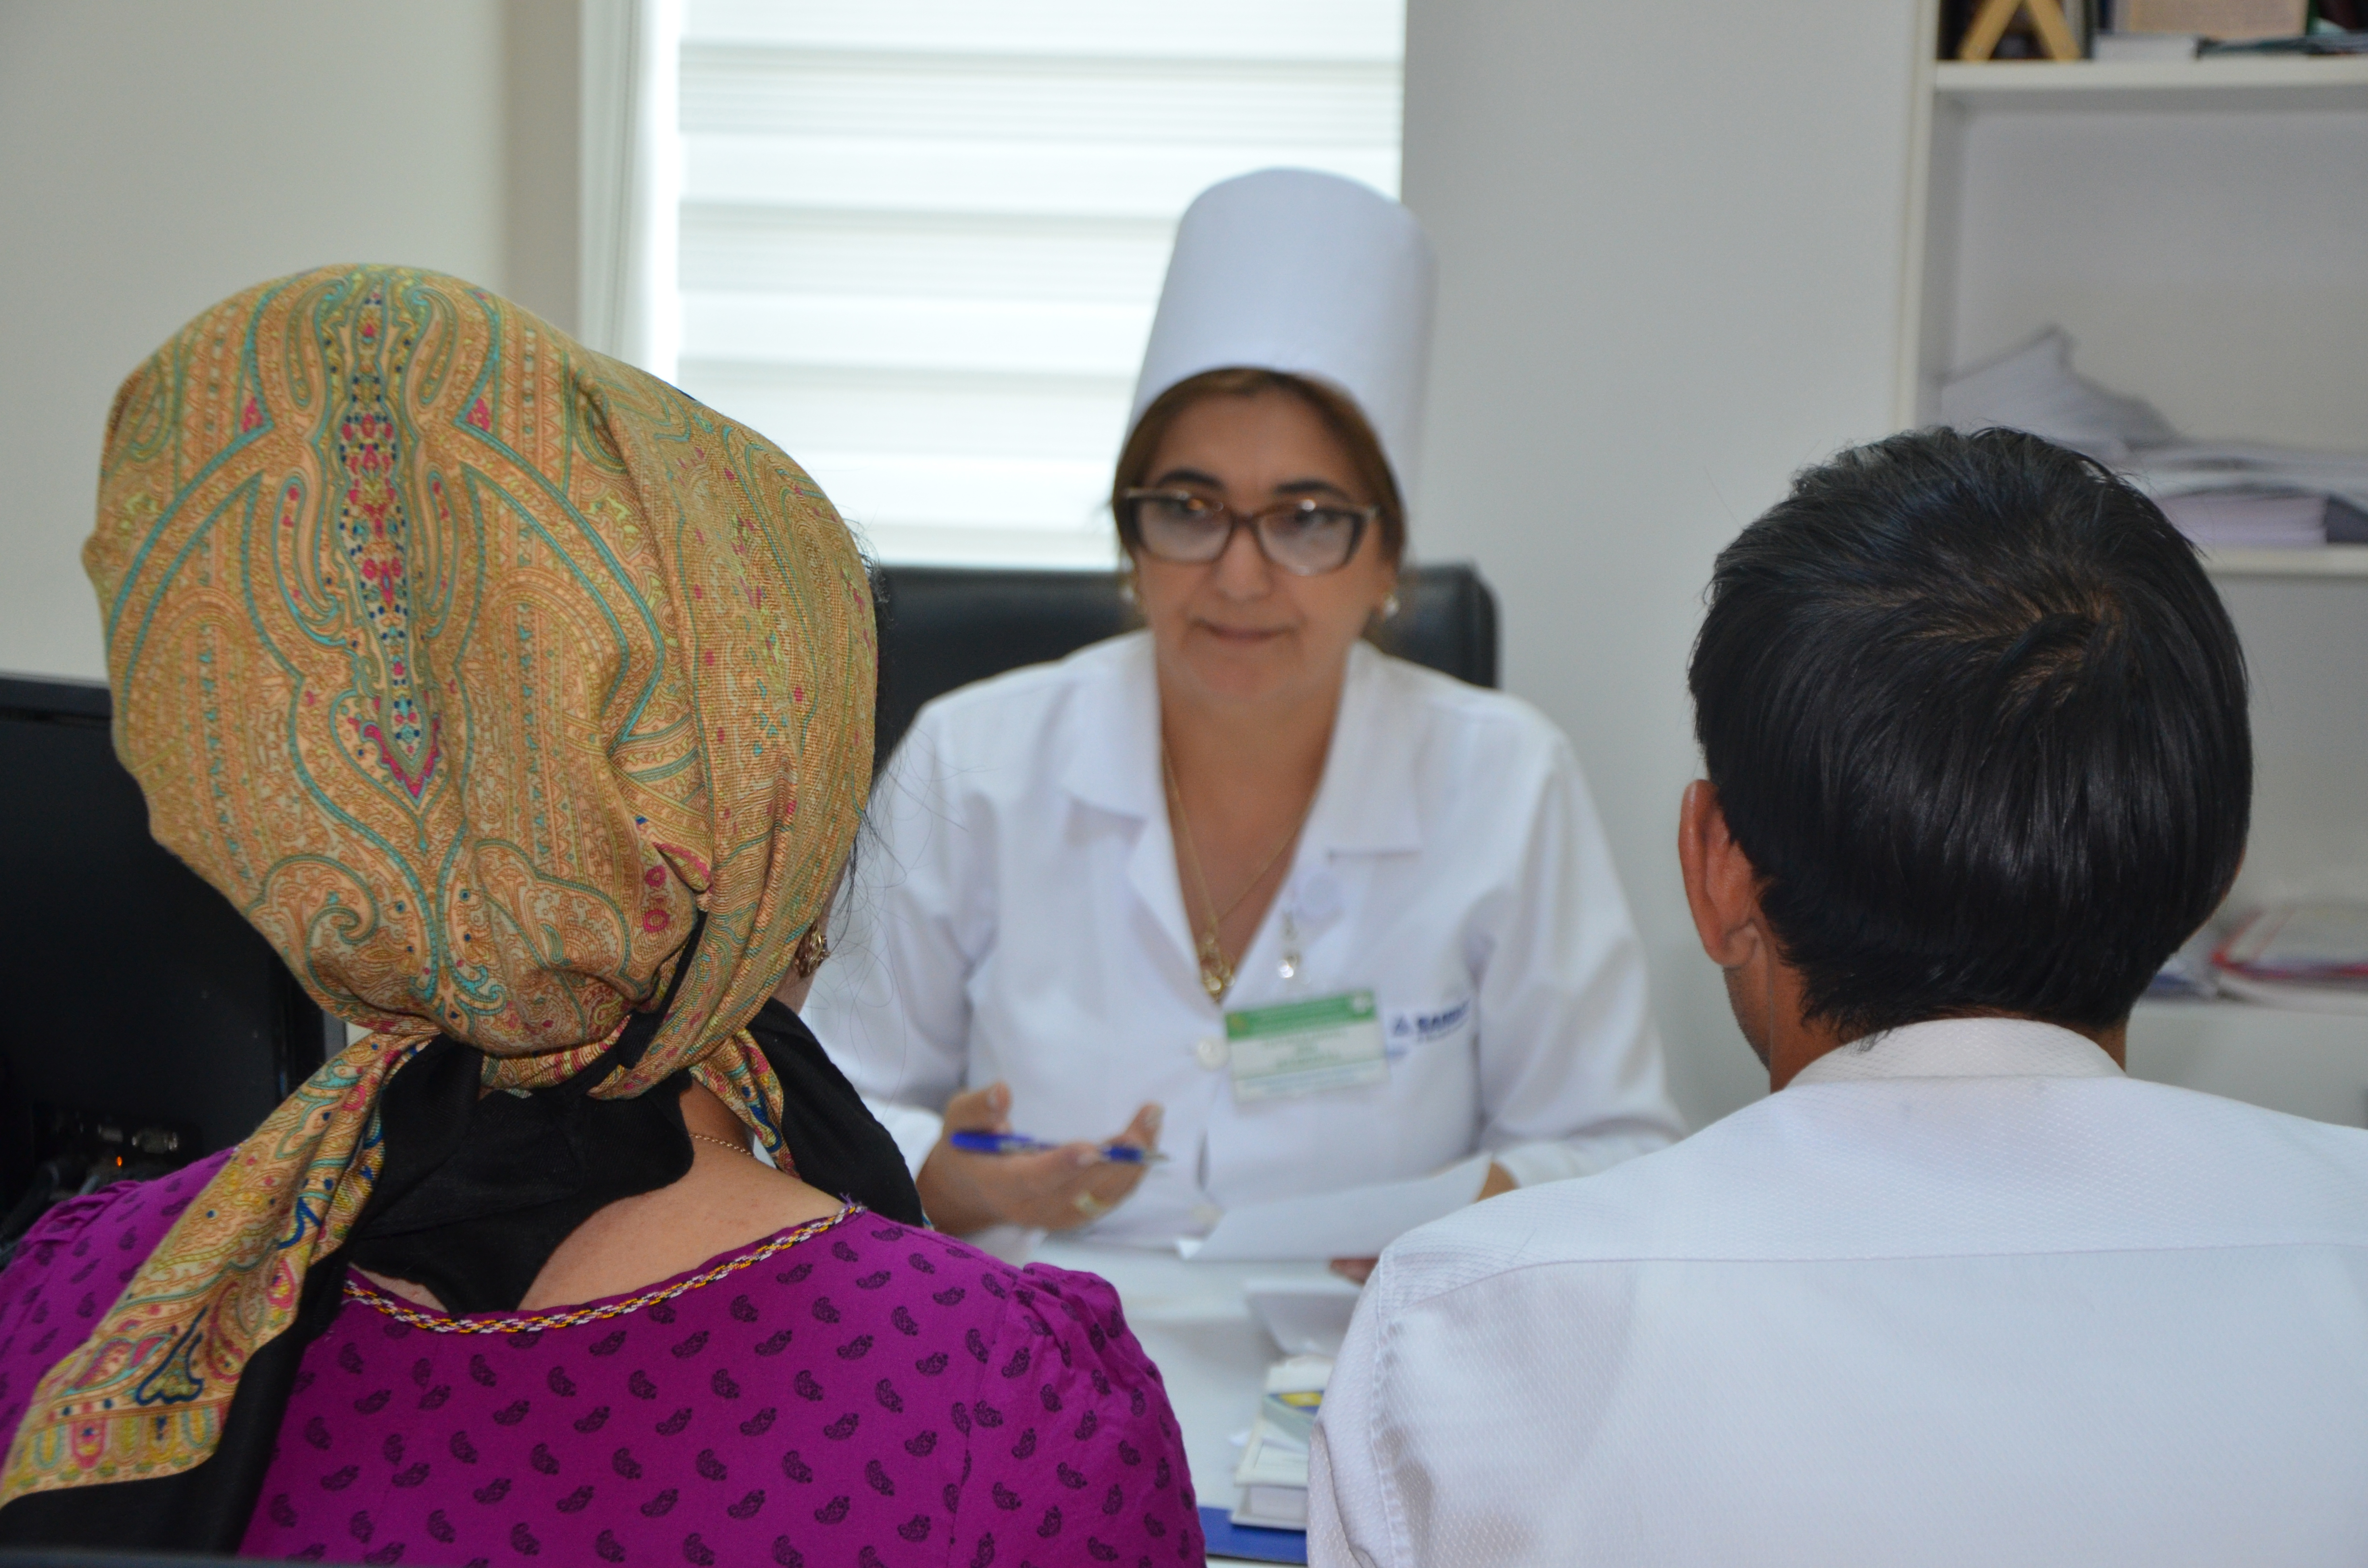 In Turkmenistan, a reproductive health campaign changes attitudes